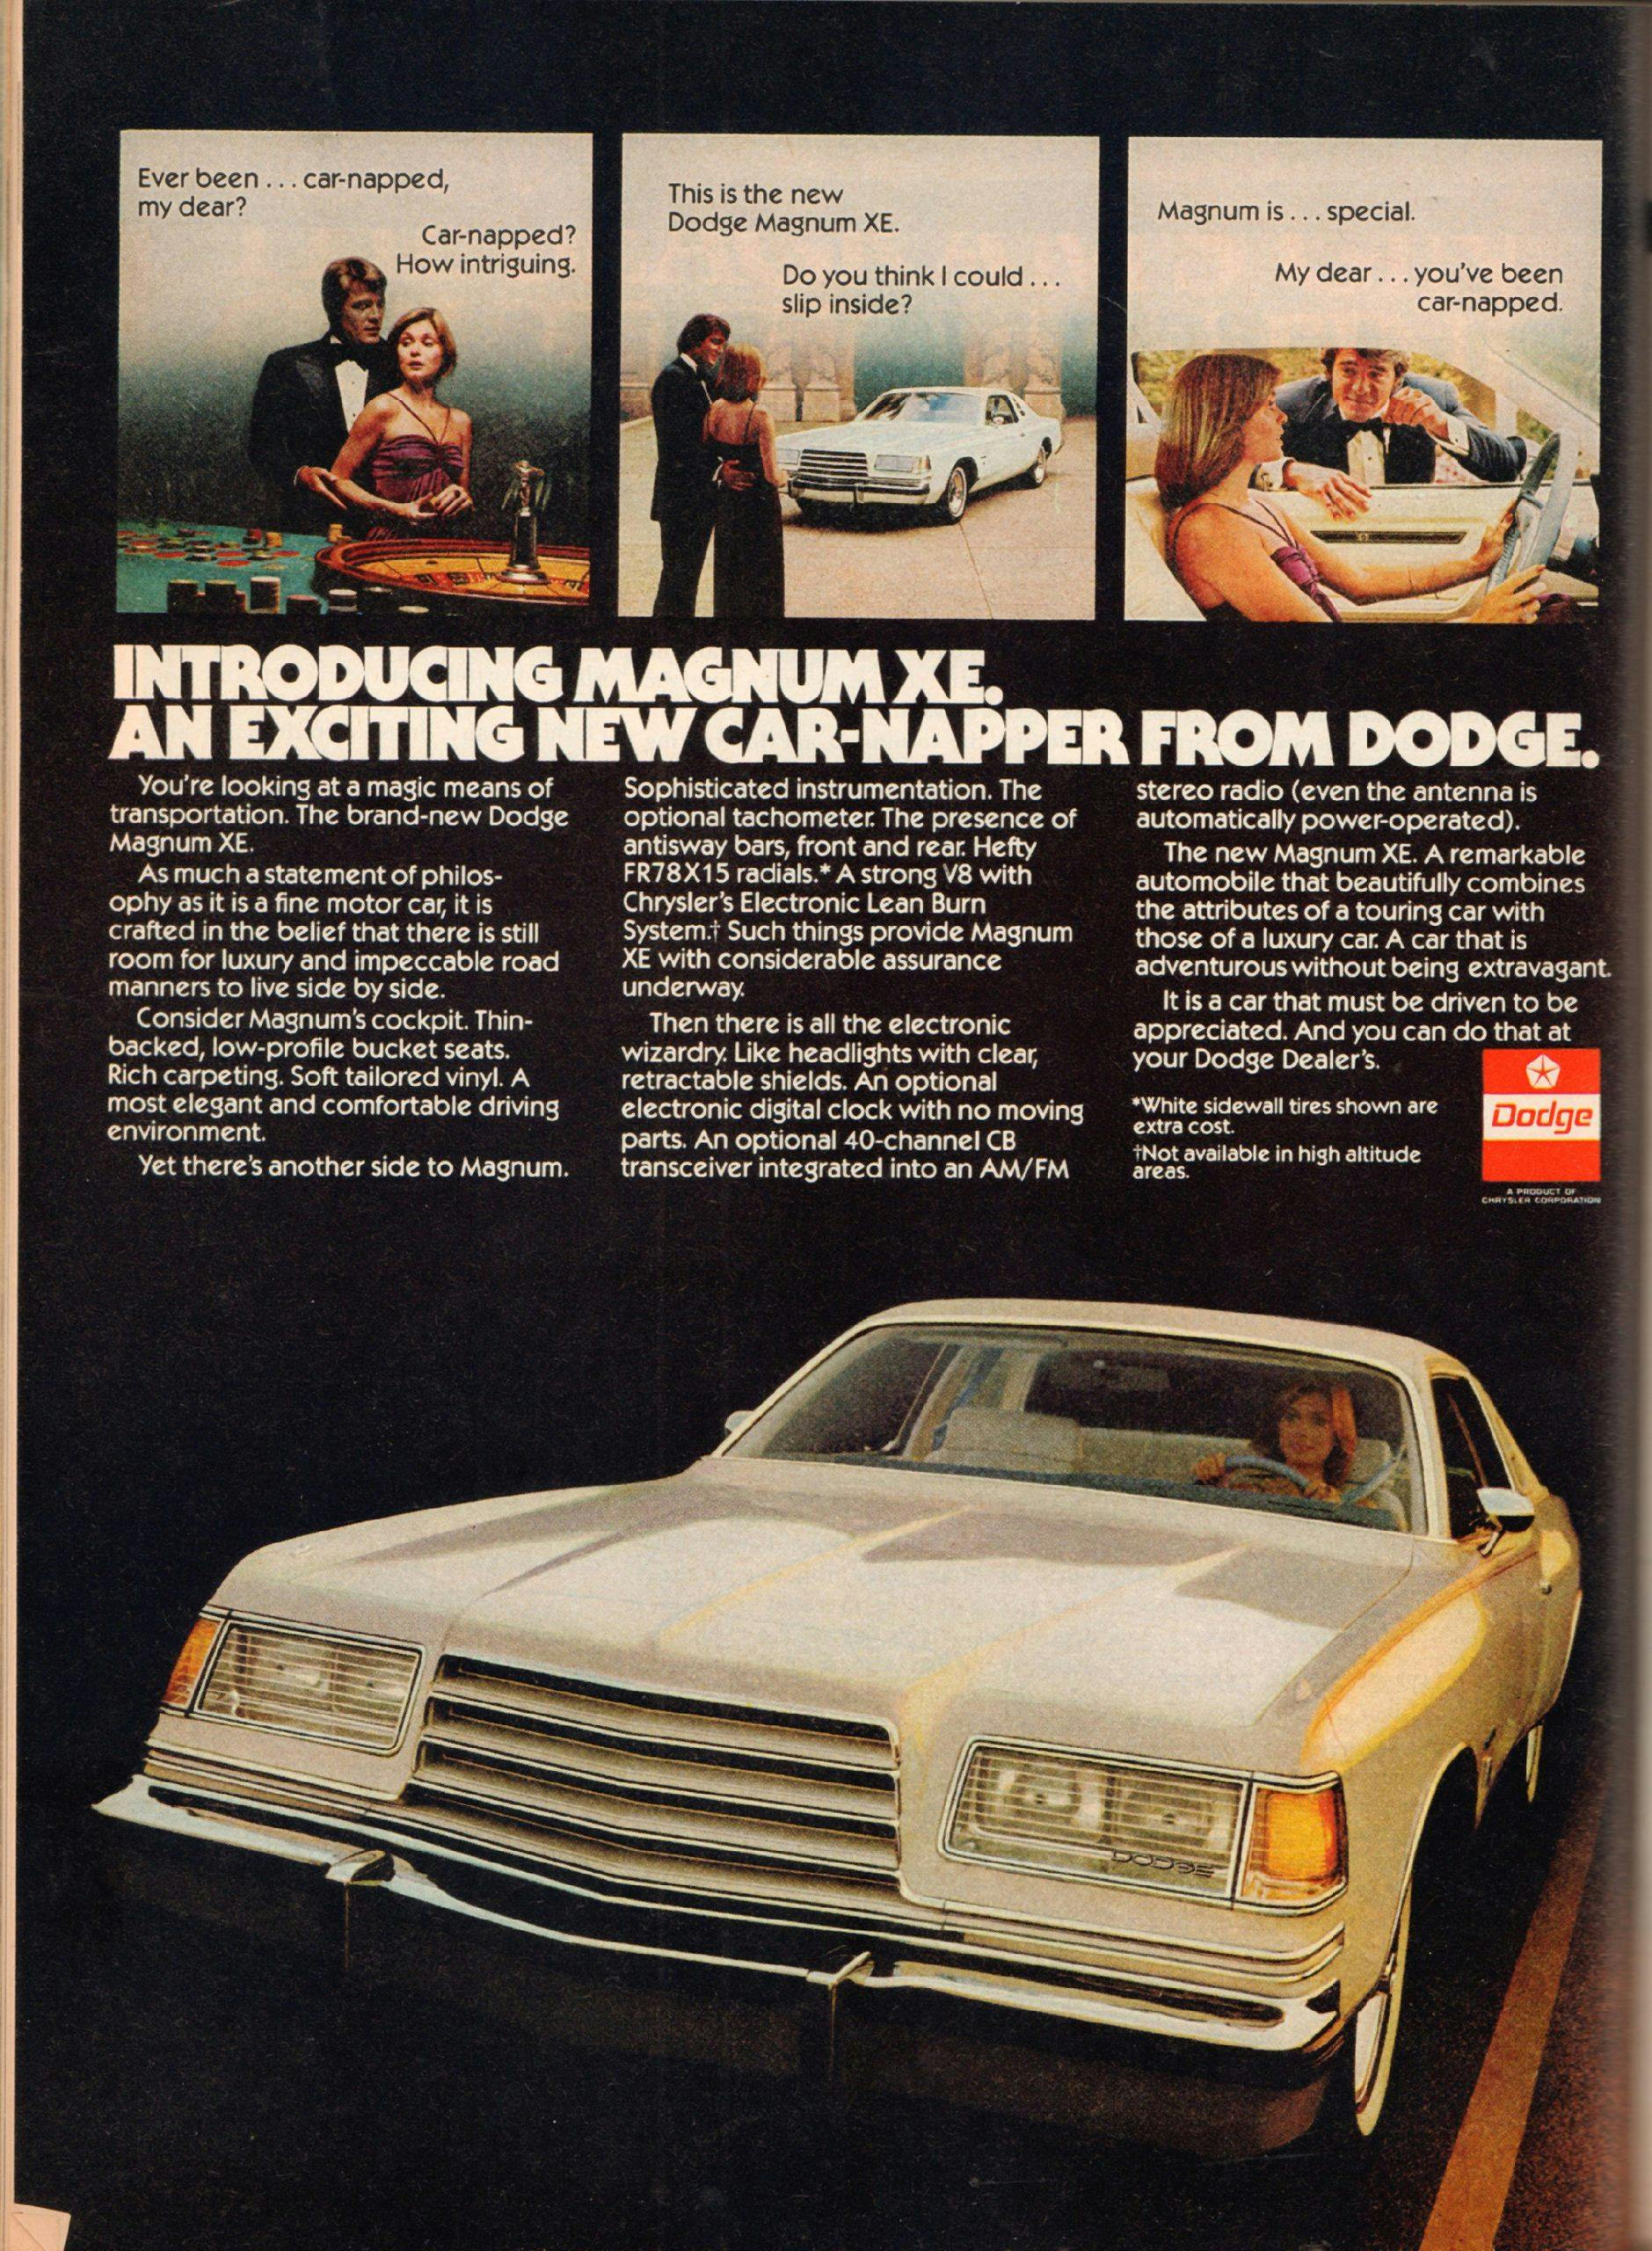 1978 Dodge Magnum XE advertisement